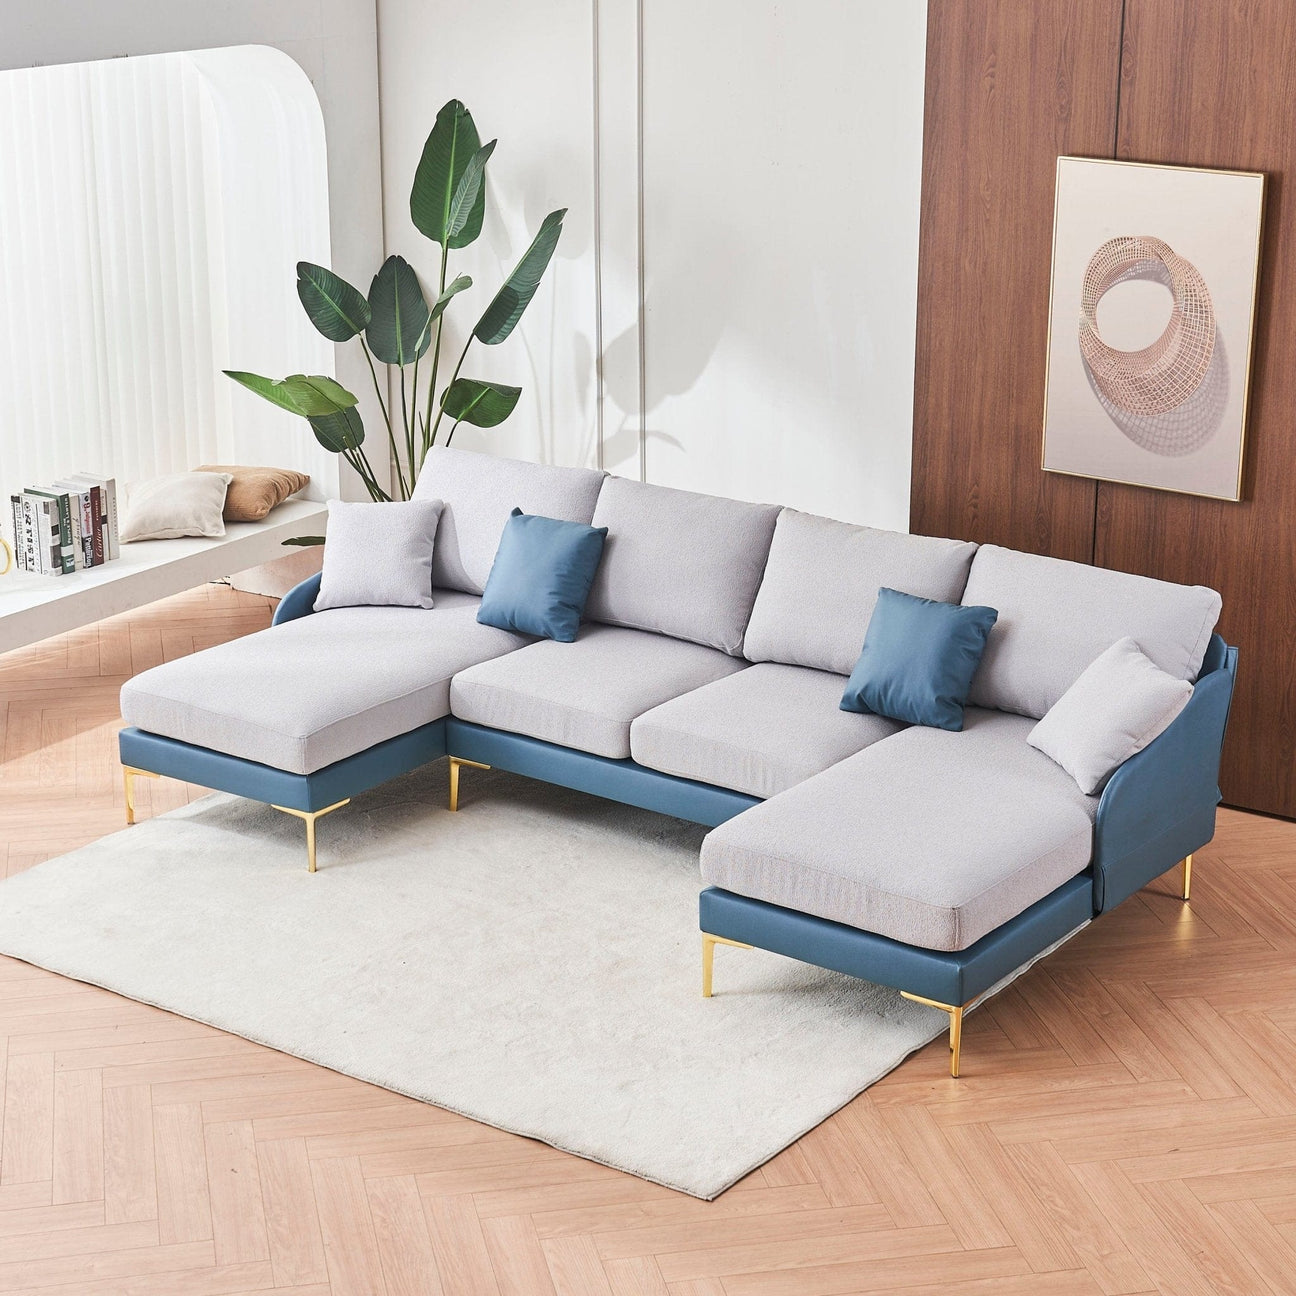 blue-grey-sectional-sofa